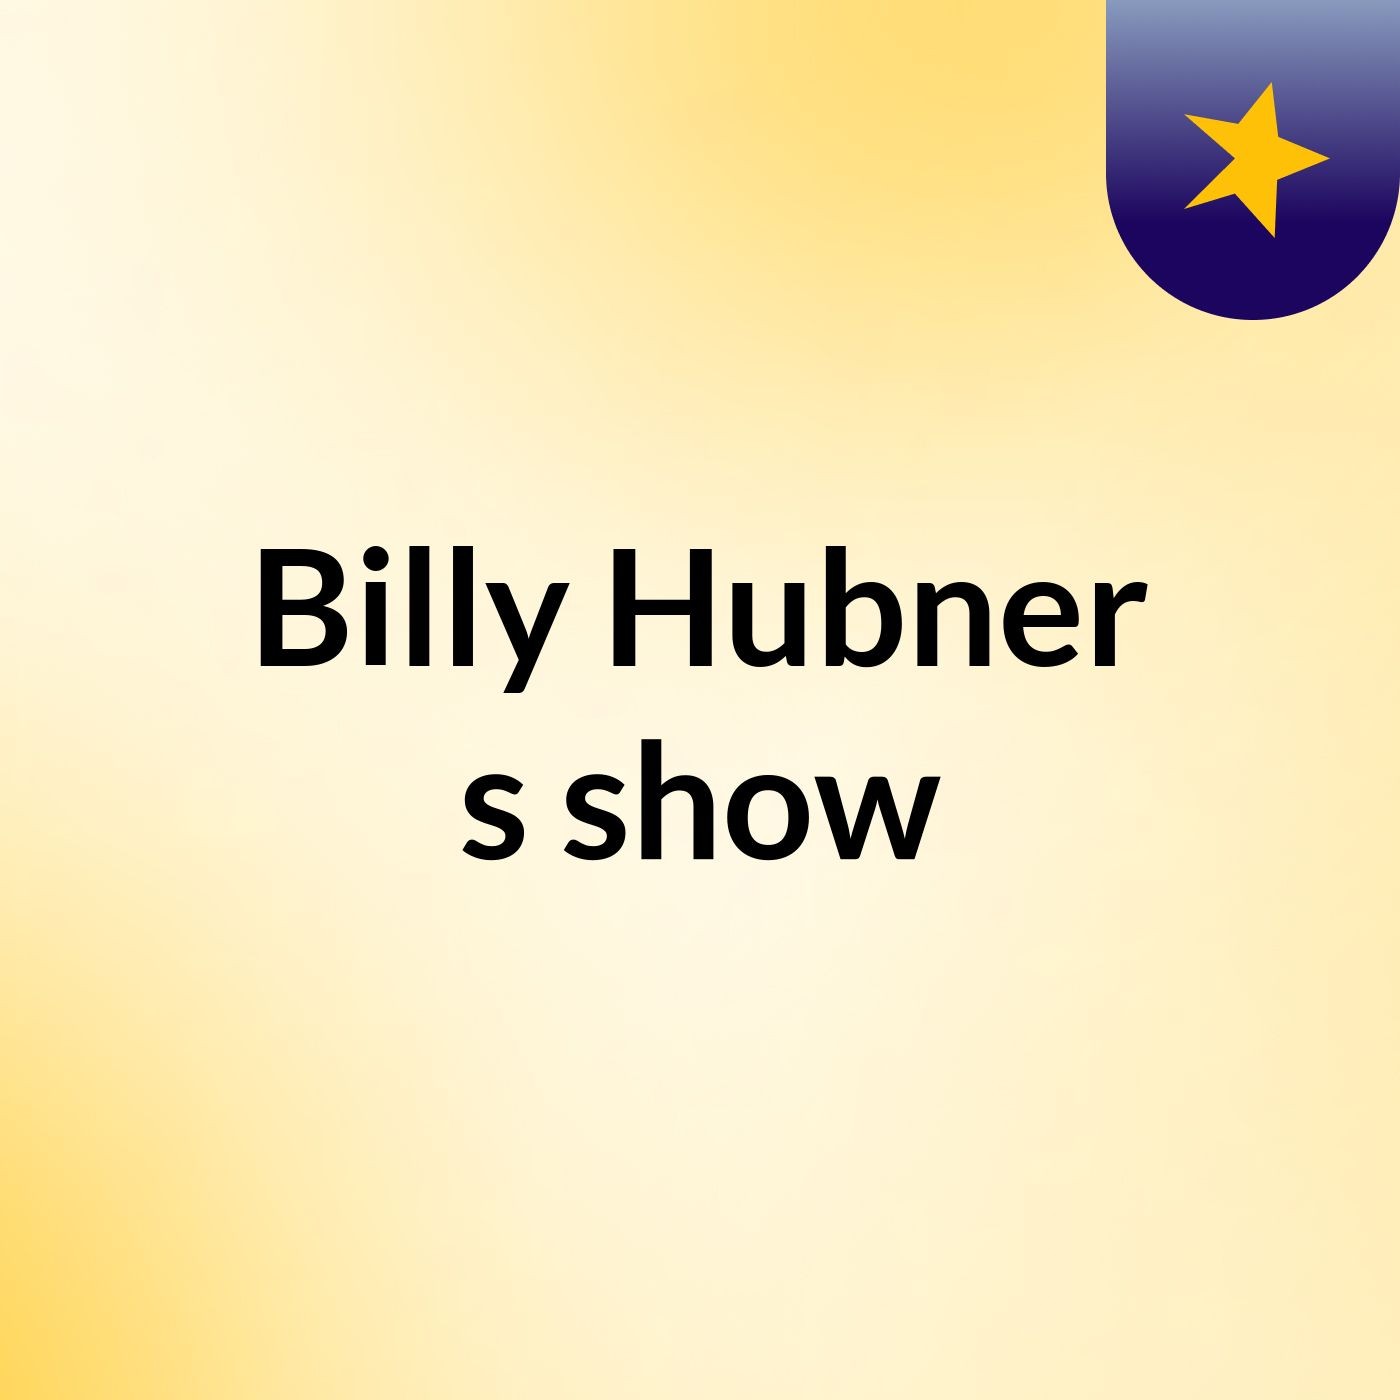 Episode 4 - Billy Hubner's show